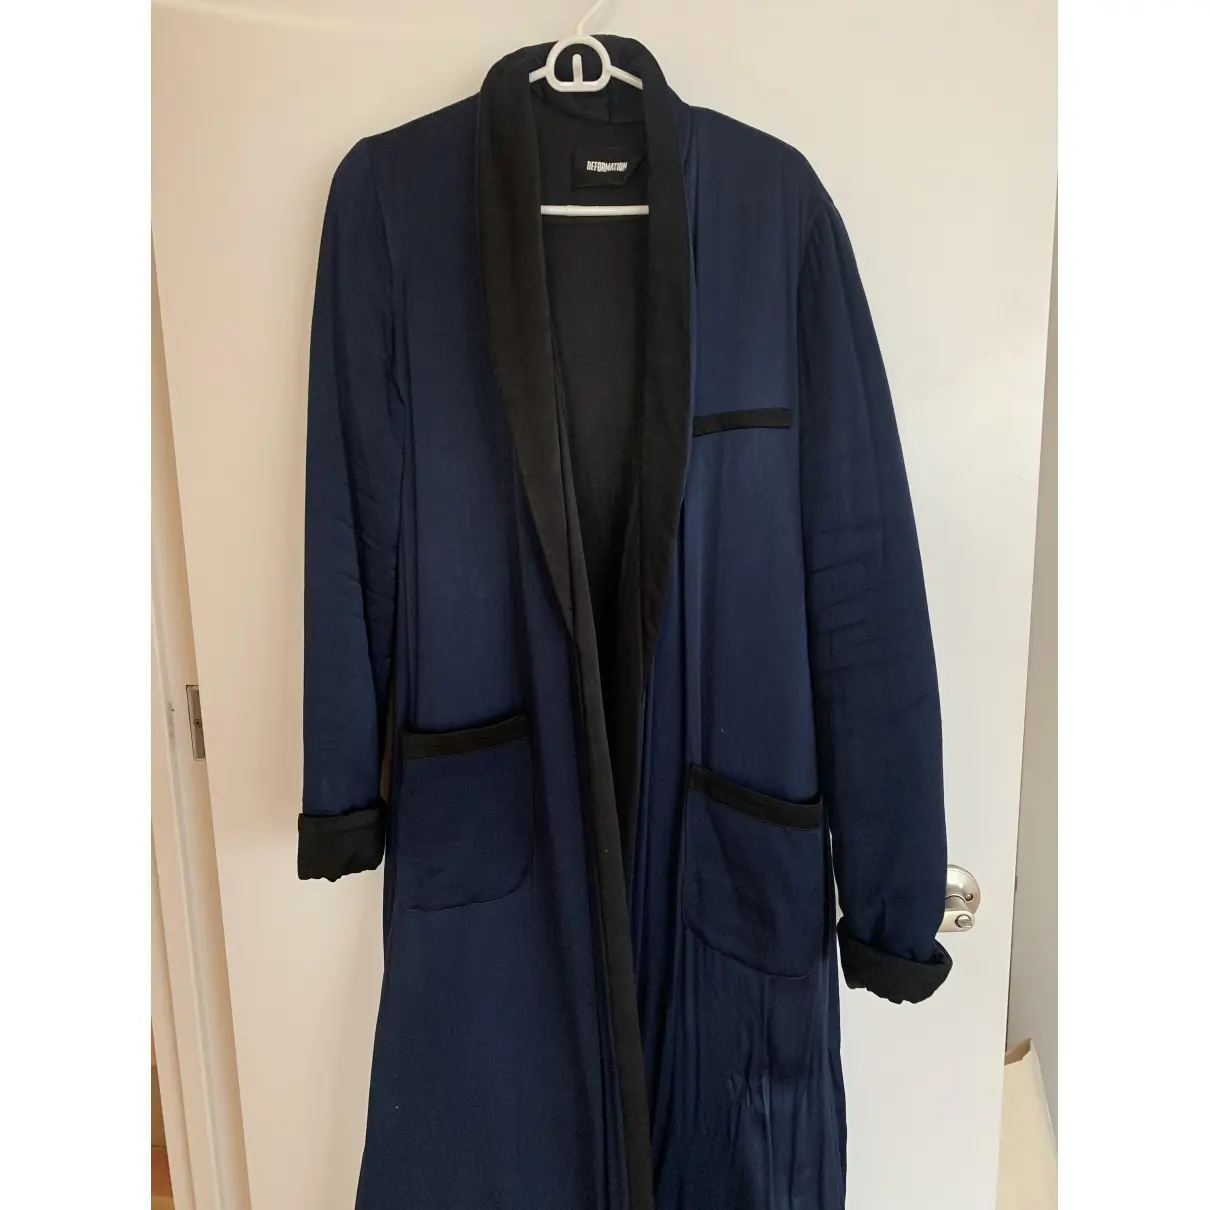 Buy Reformation Silk coat online